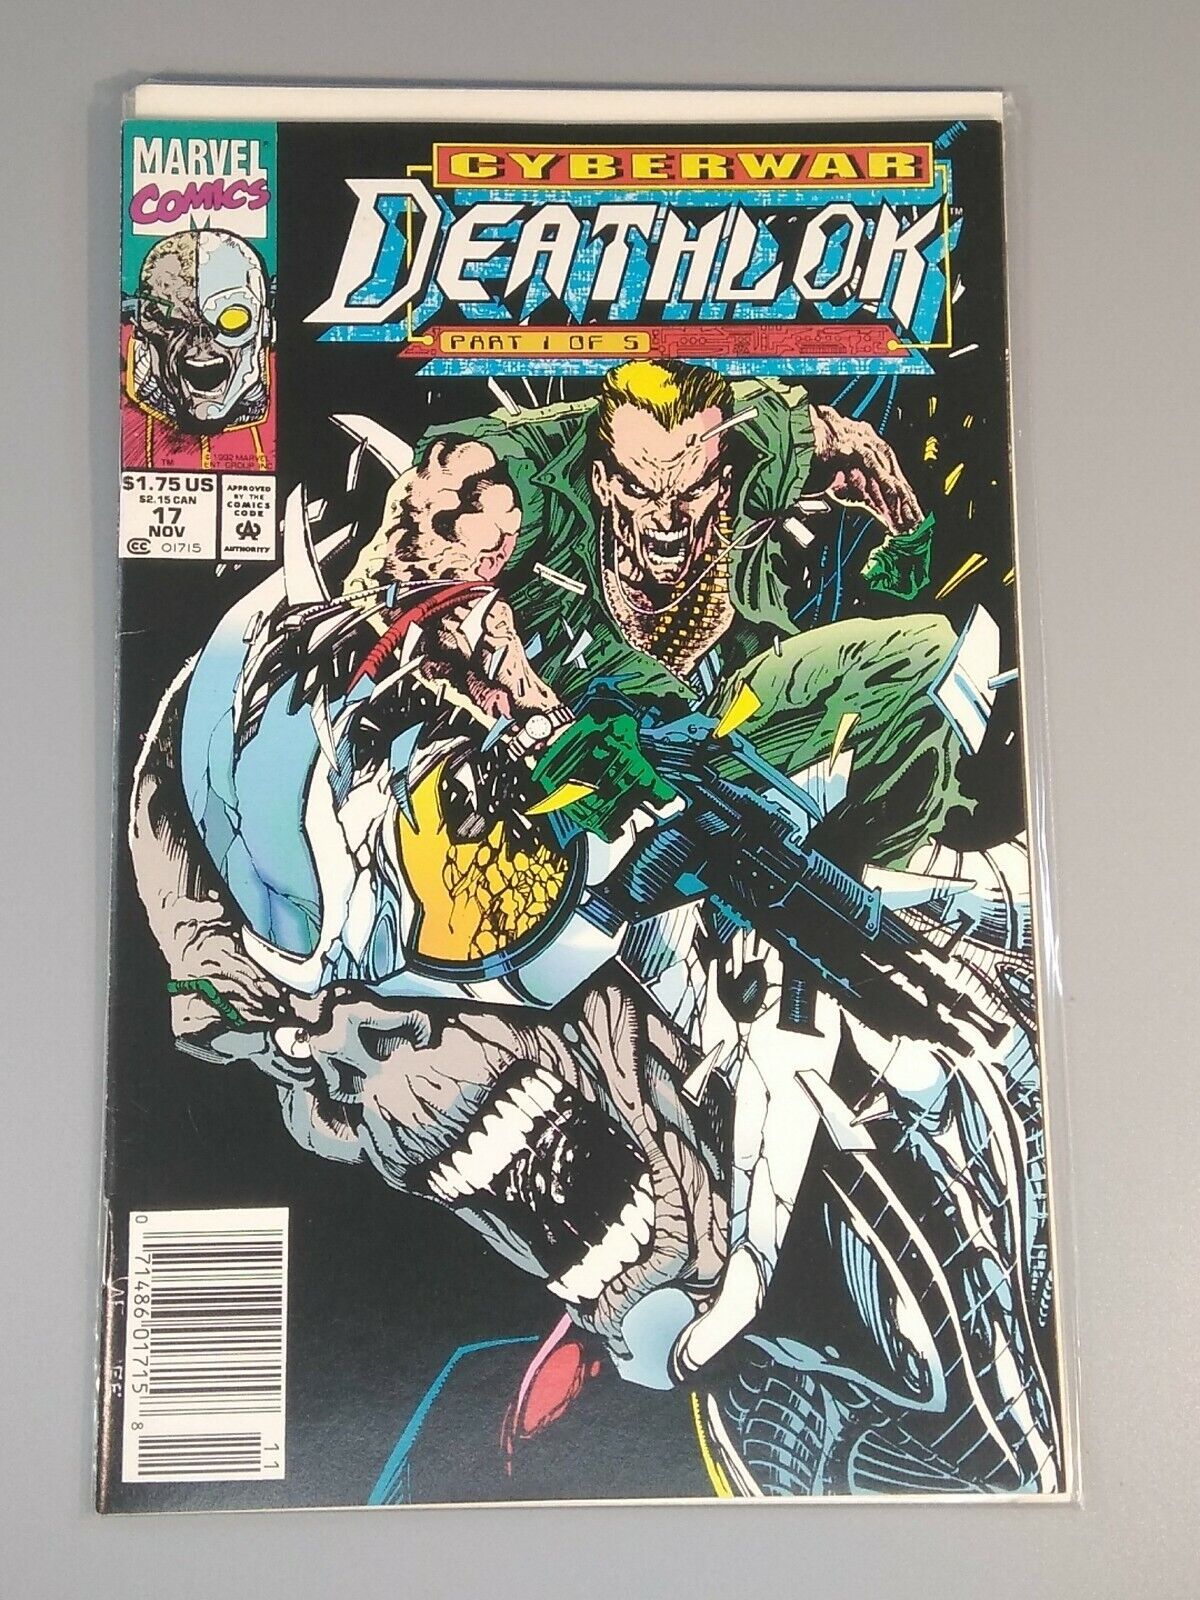 Vintage Nov 1992 DEATHLOK #17 Marvel Comic Pt.1 of 5 Near Mint In Plastic Sleeve